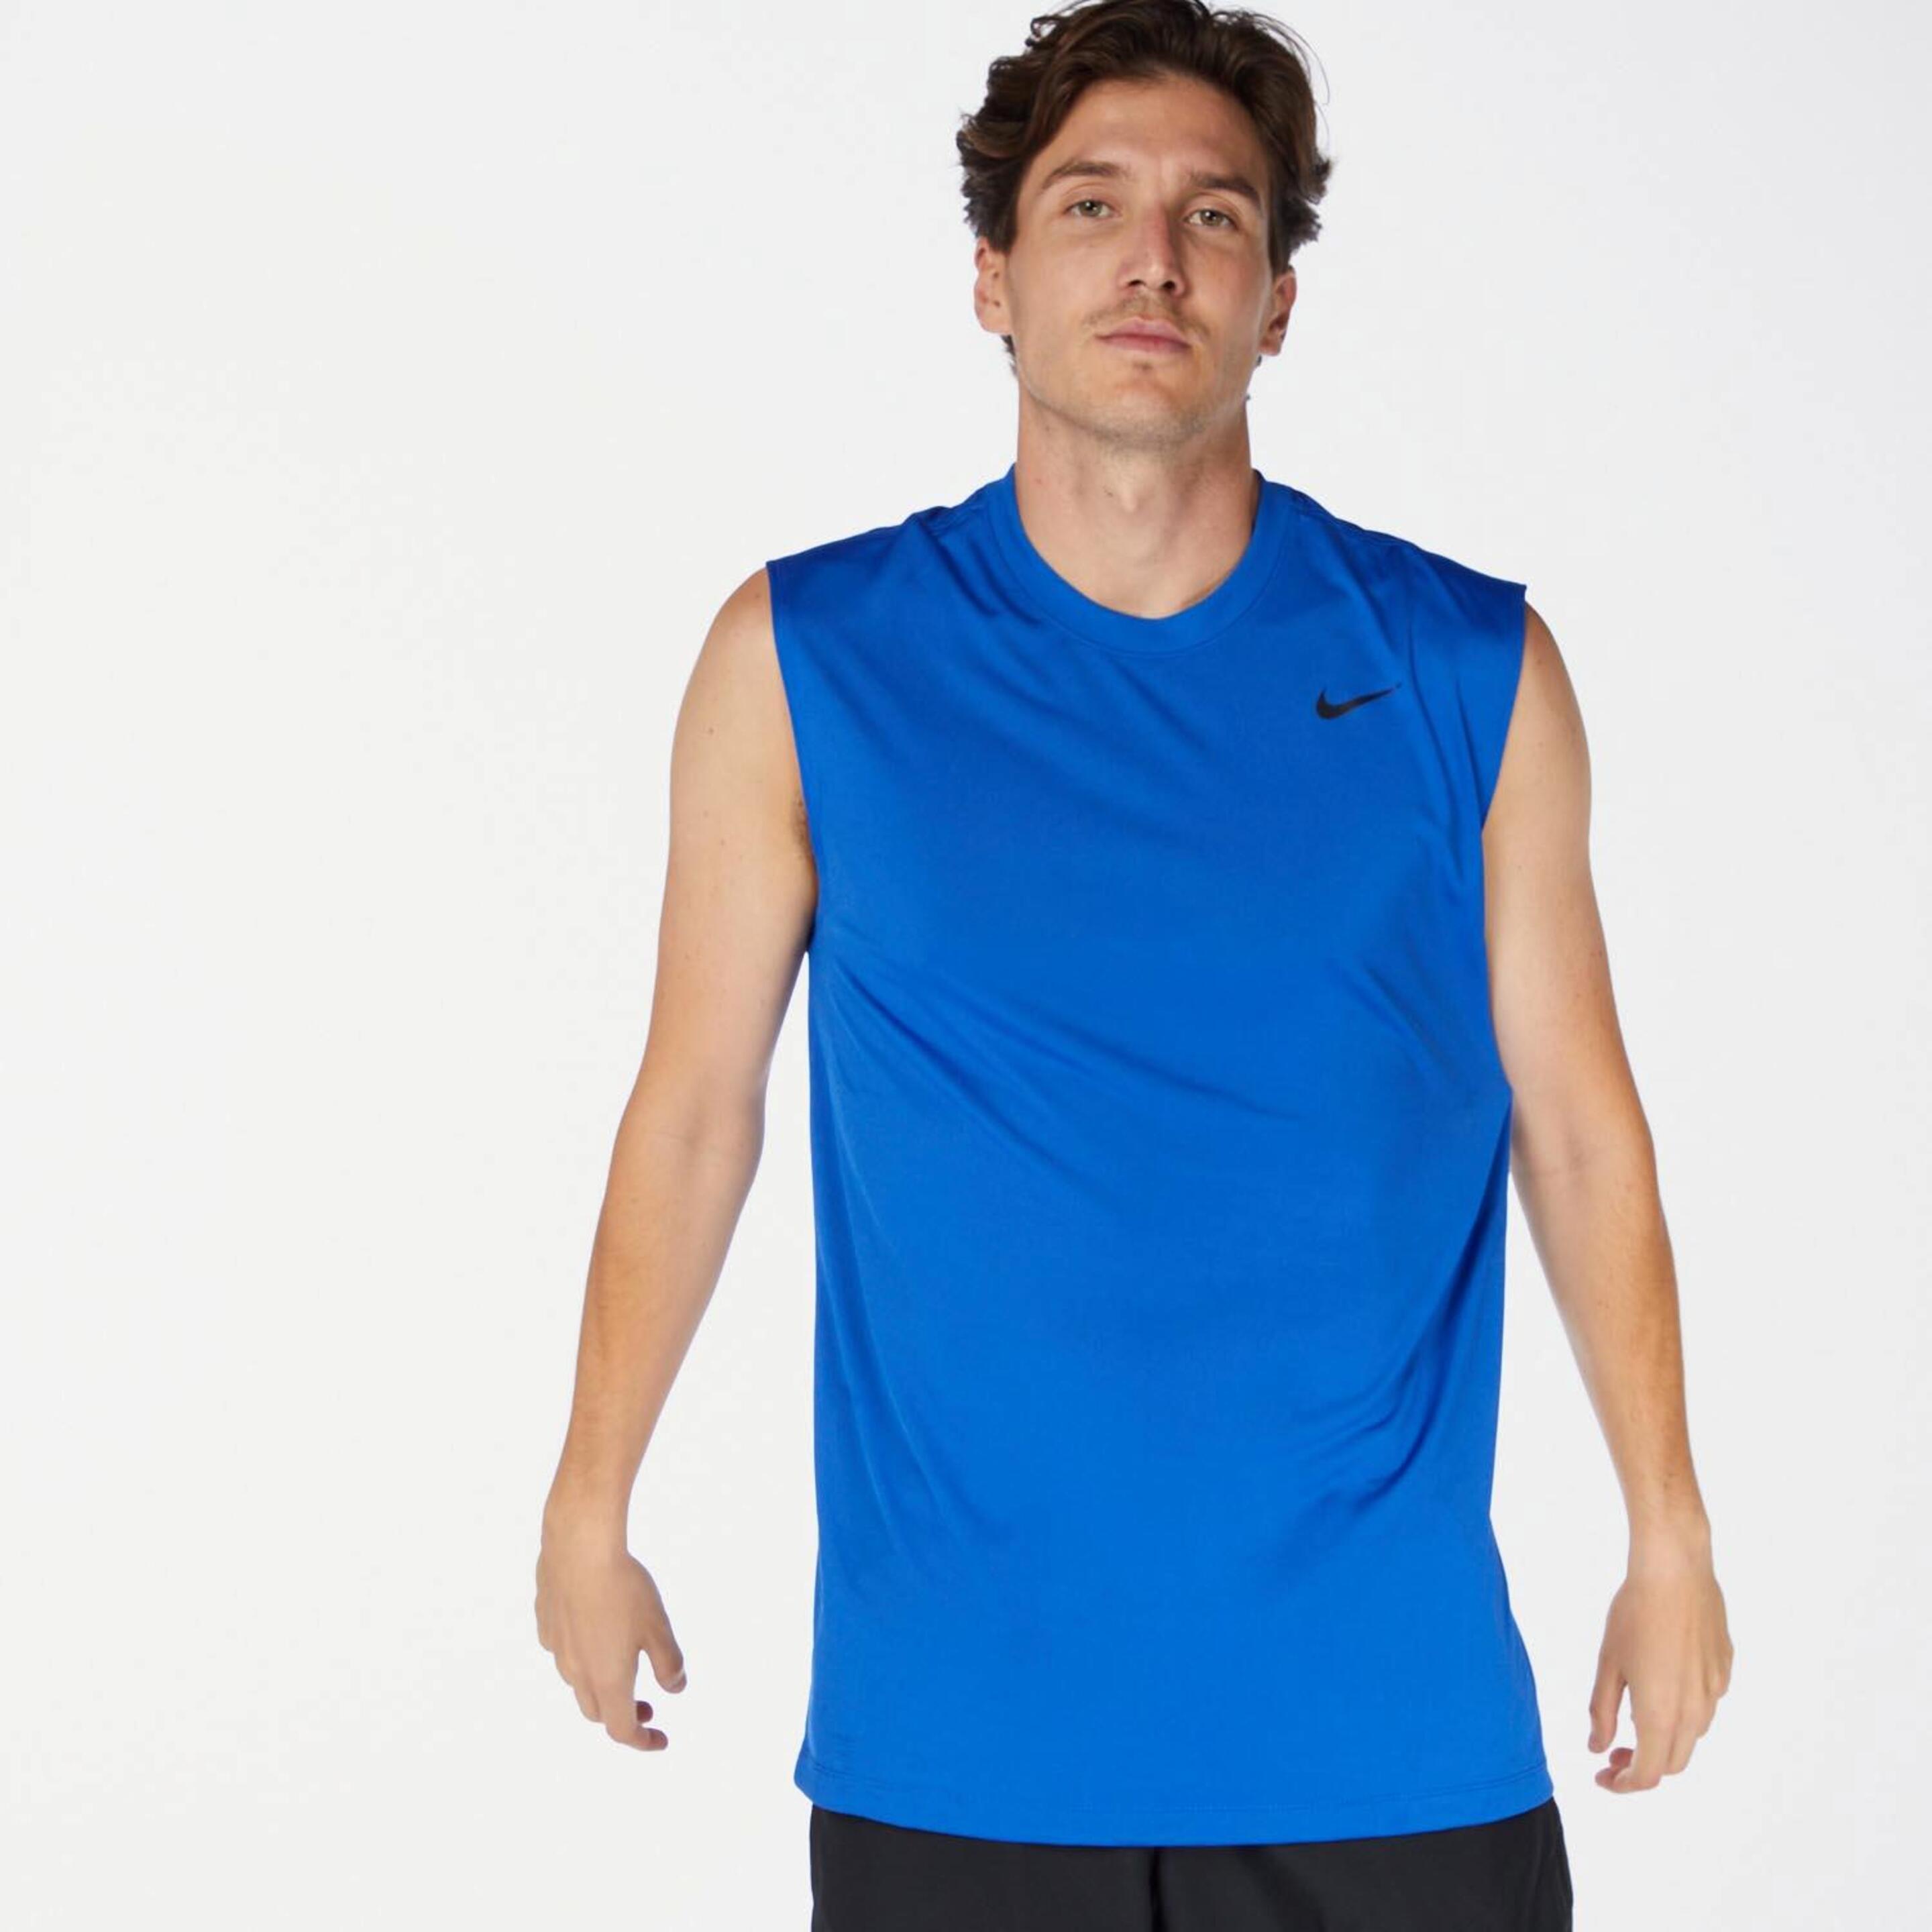 Nike Rlgd - azul - Camisola Running Homem